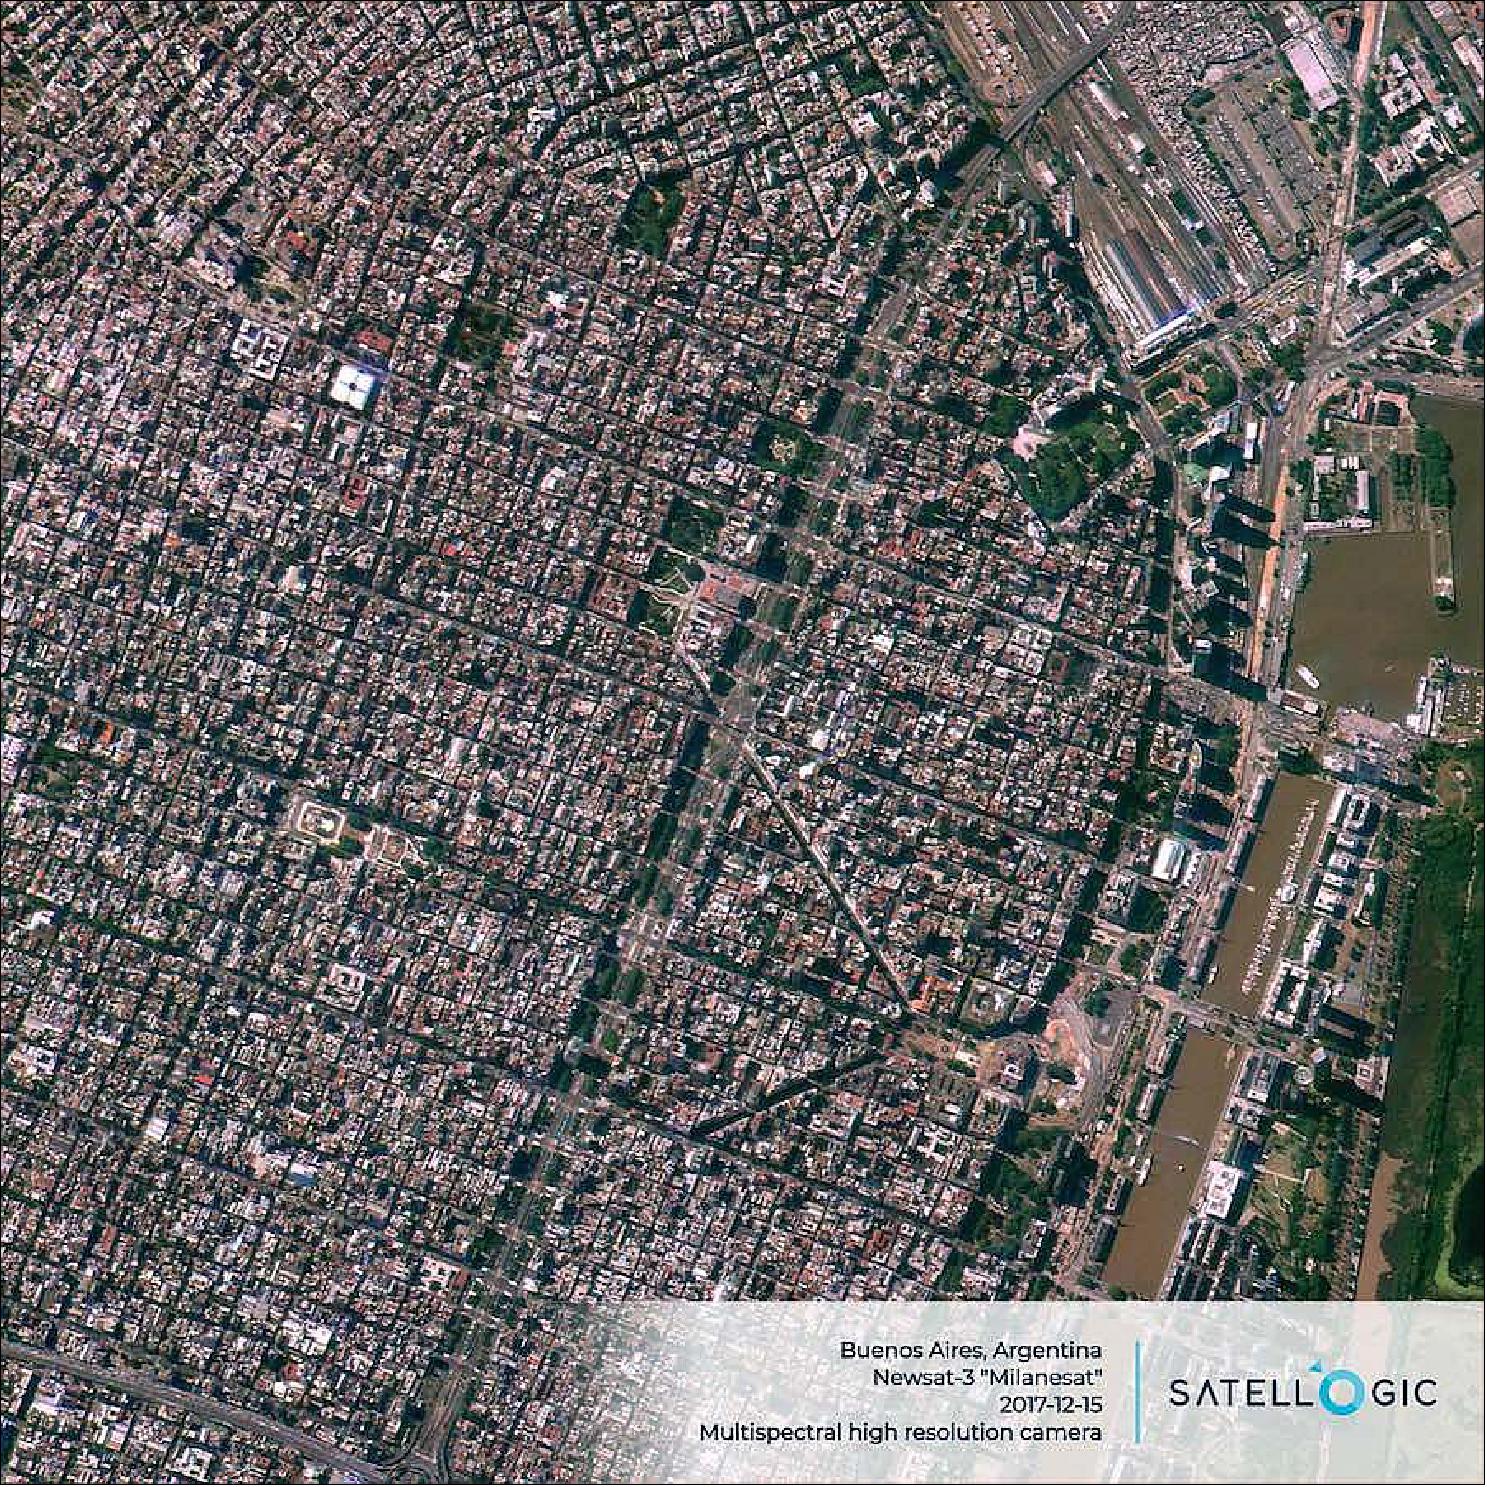 Figure 14: The ÑuSat-3 microsatellite of Satellogic captured this view of Buenos Aires in December 2017 (image credit: Satellogic)